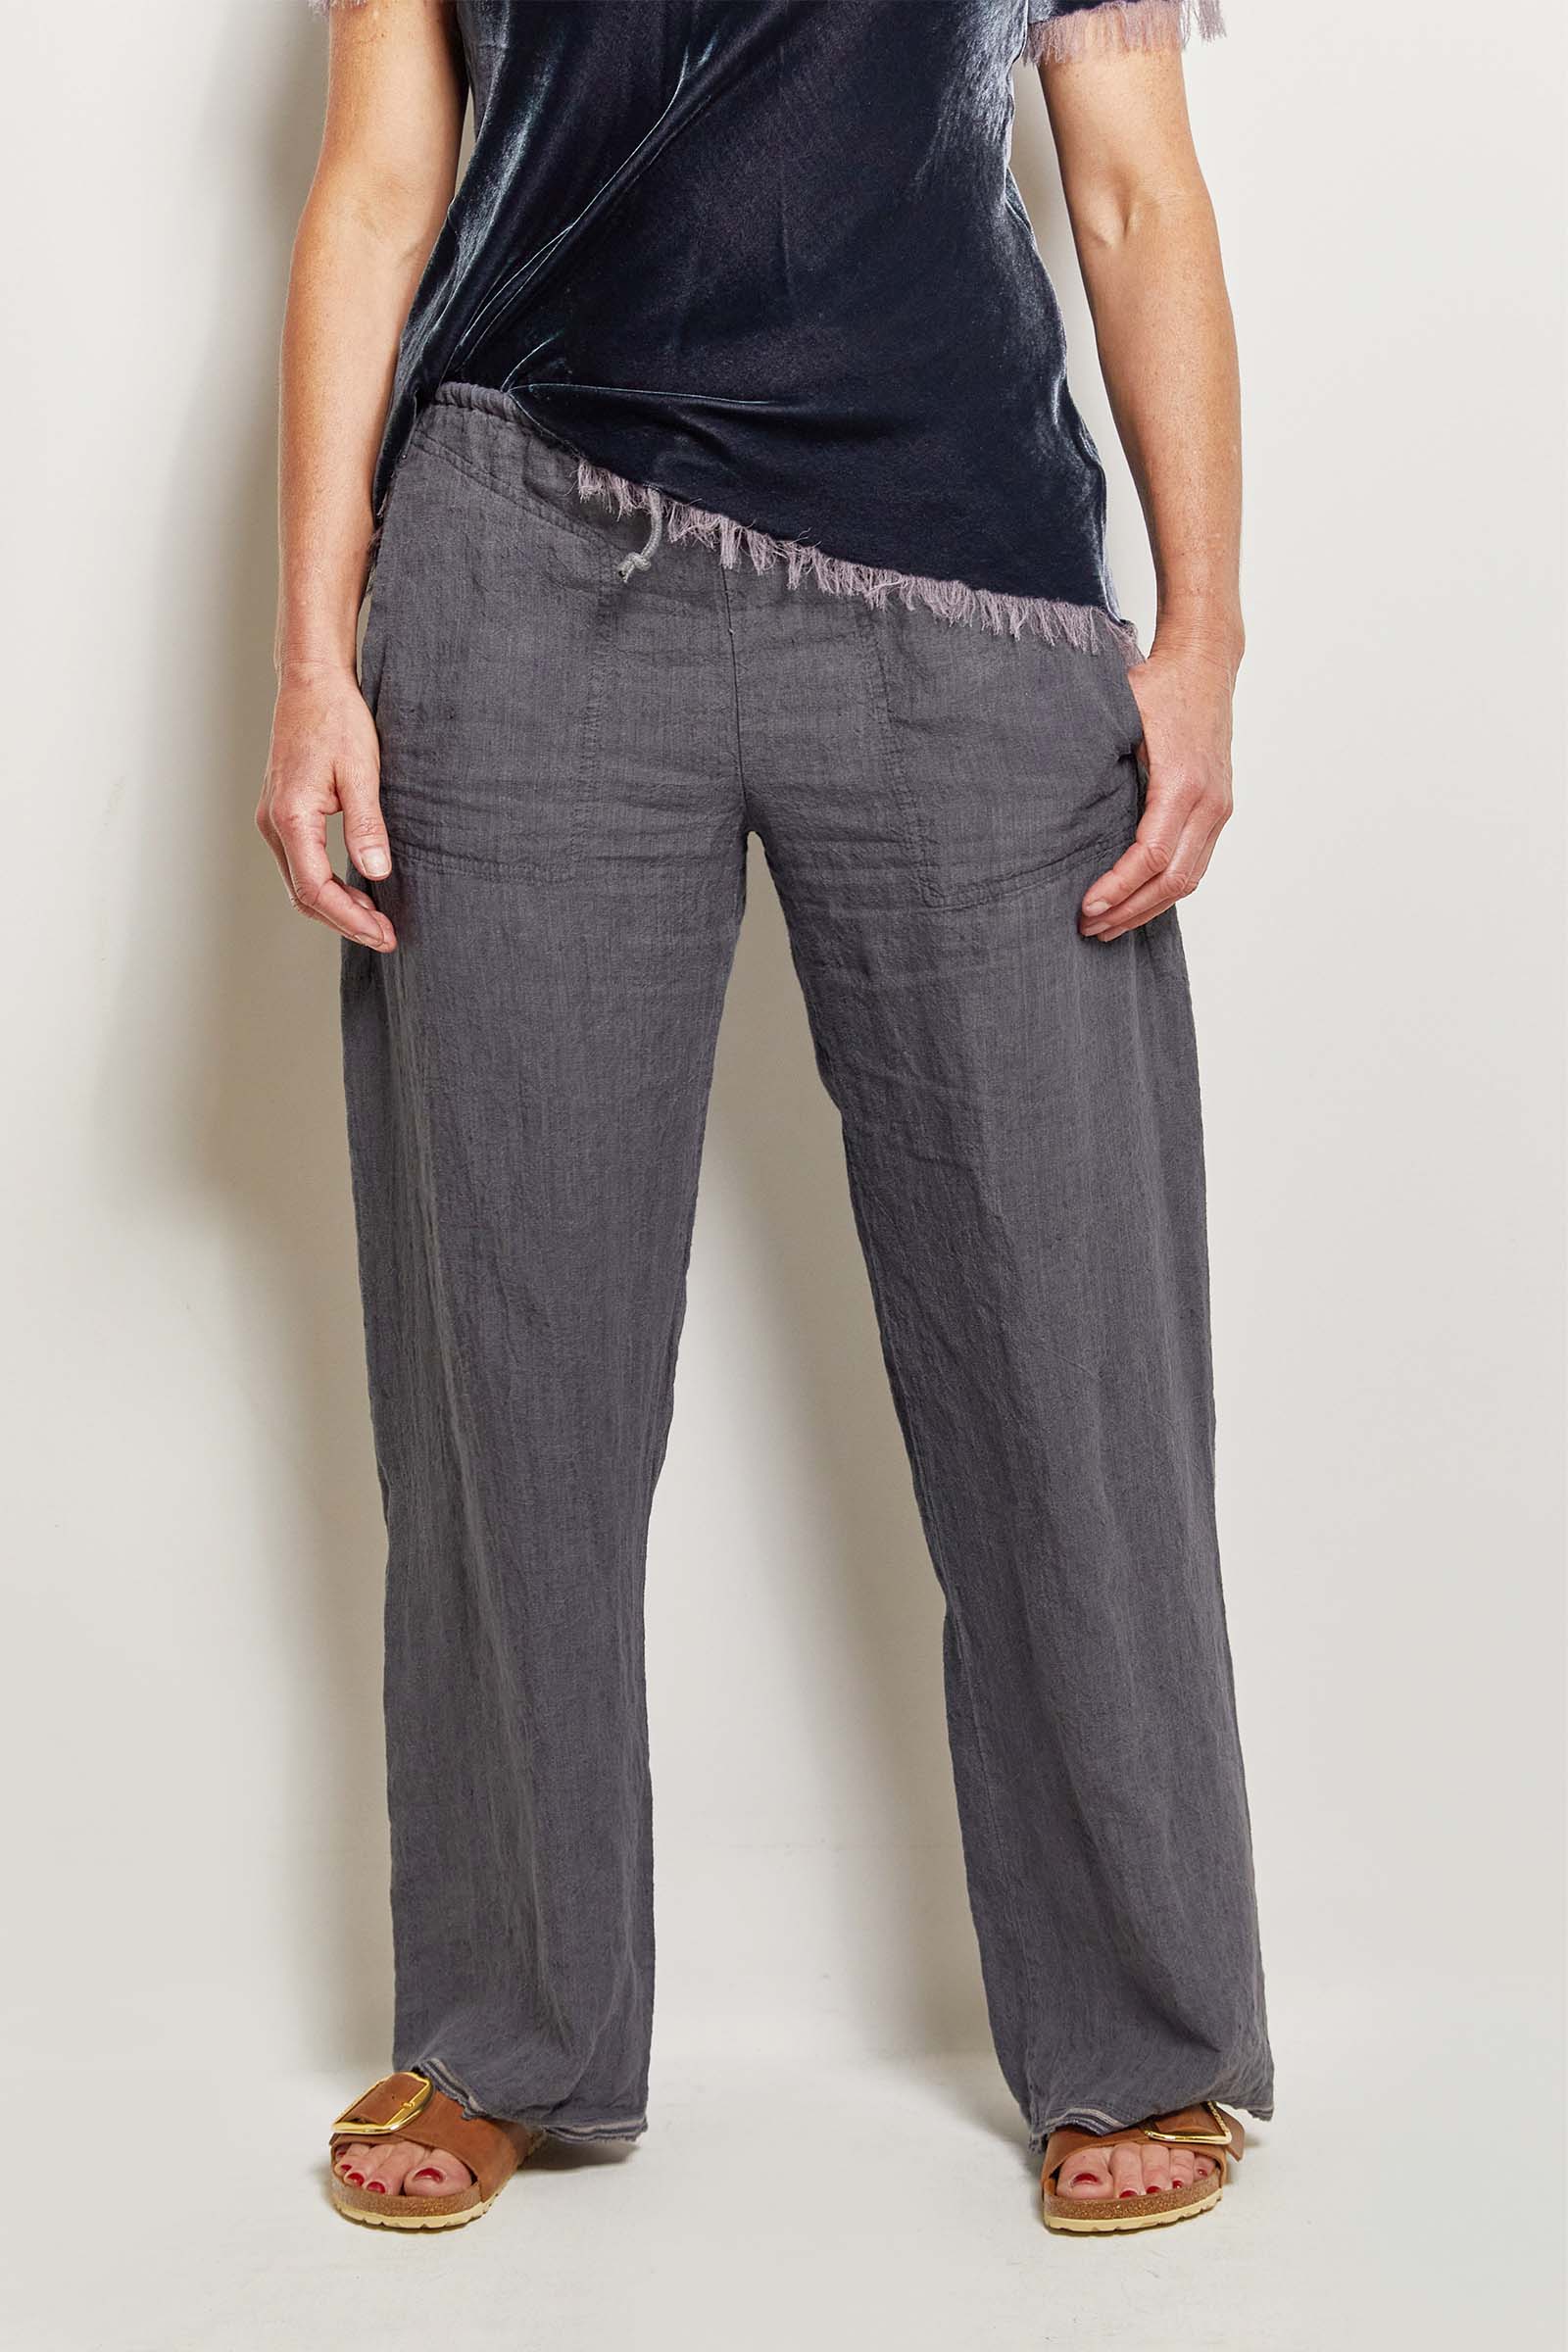 byfreer's luxurious linen honest pants.